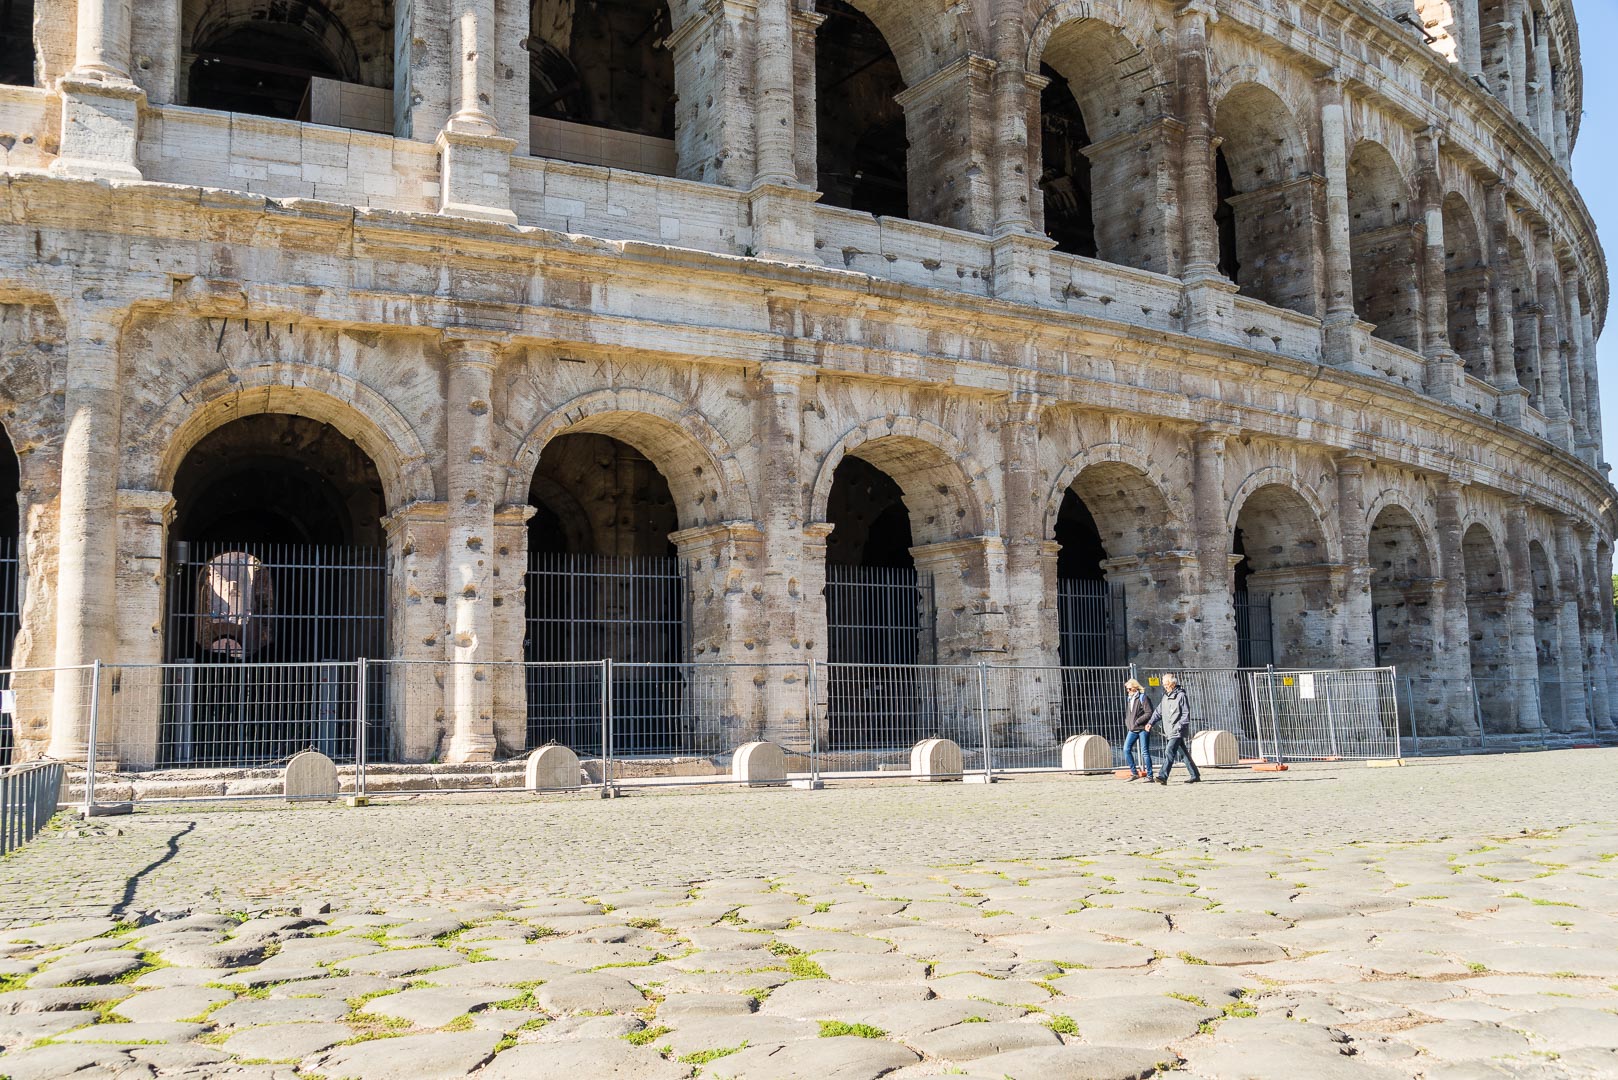 Backplate • ID: 12266 • HDRI Haven - Ruins Of Colosseum